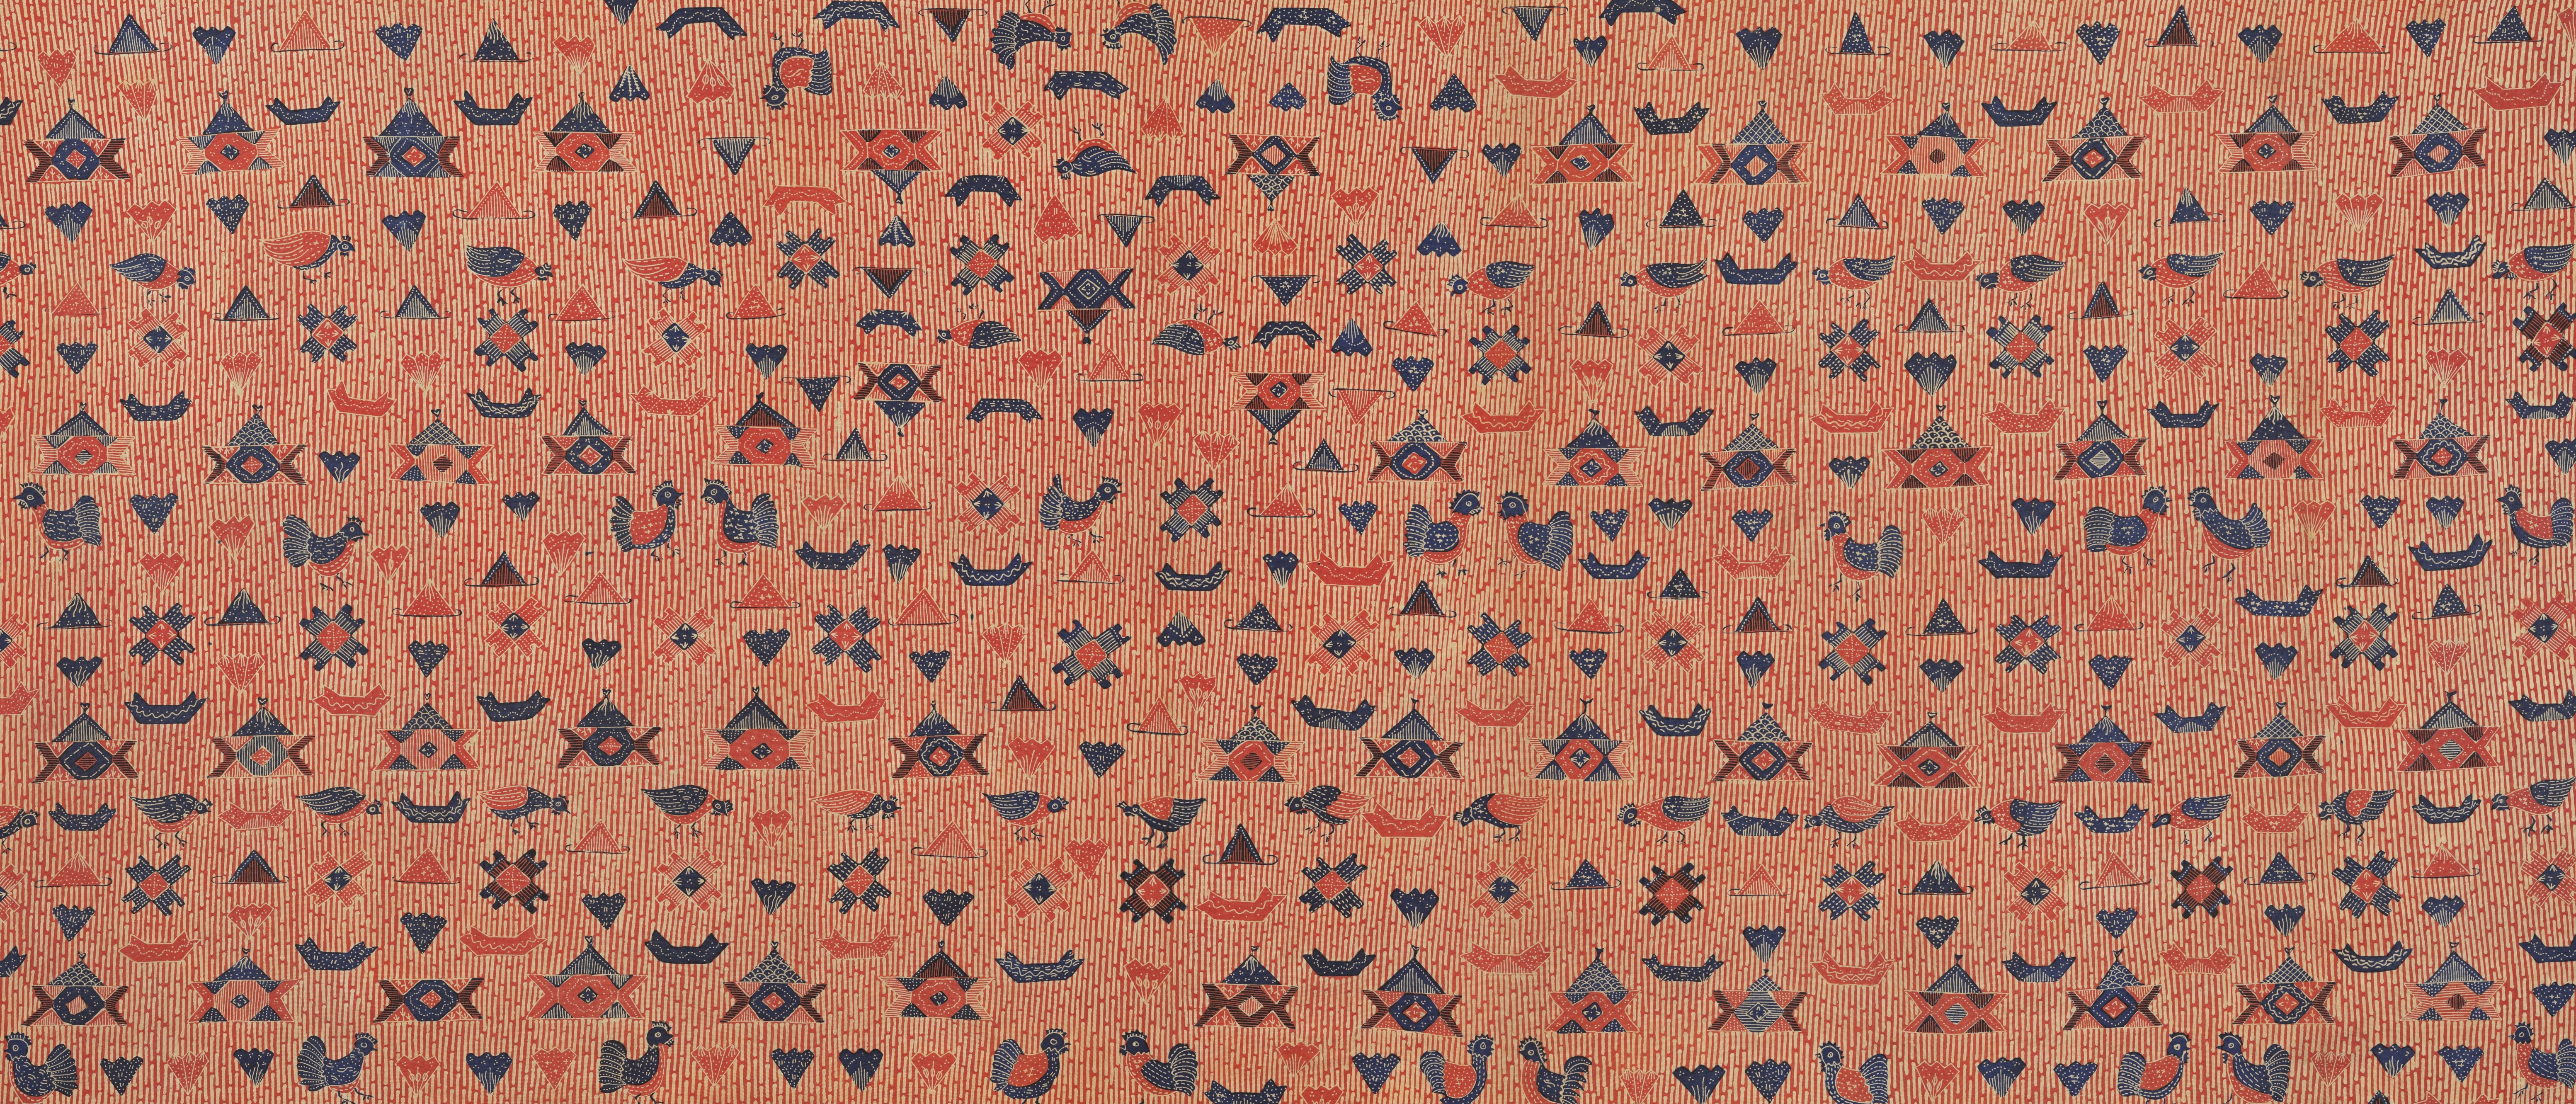 Ultra Wide Ultrawide Fabric Texture Pattern Symmetry 6214x2663